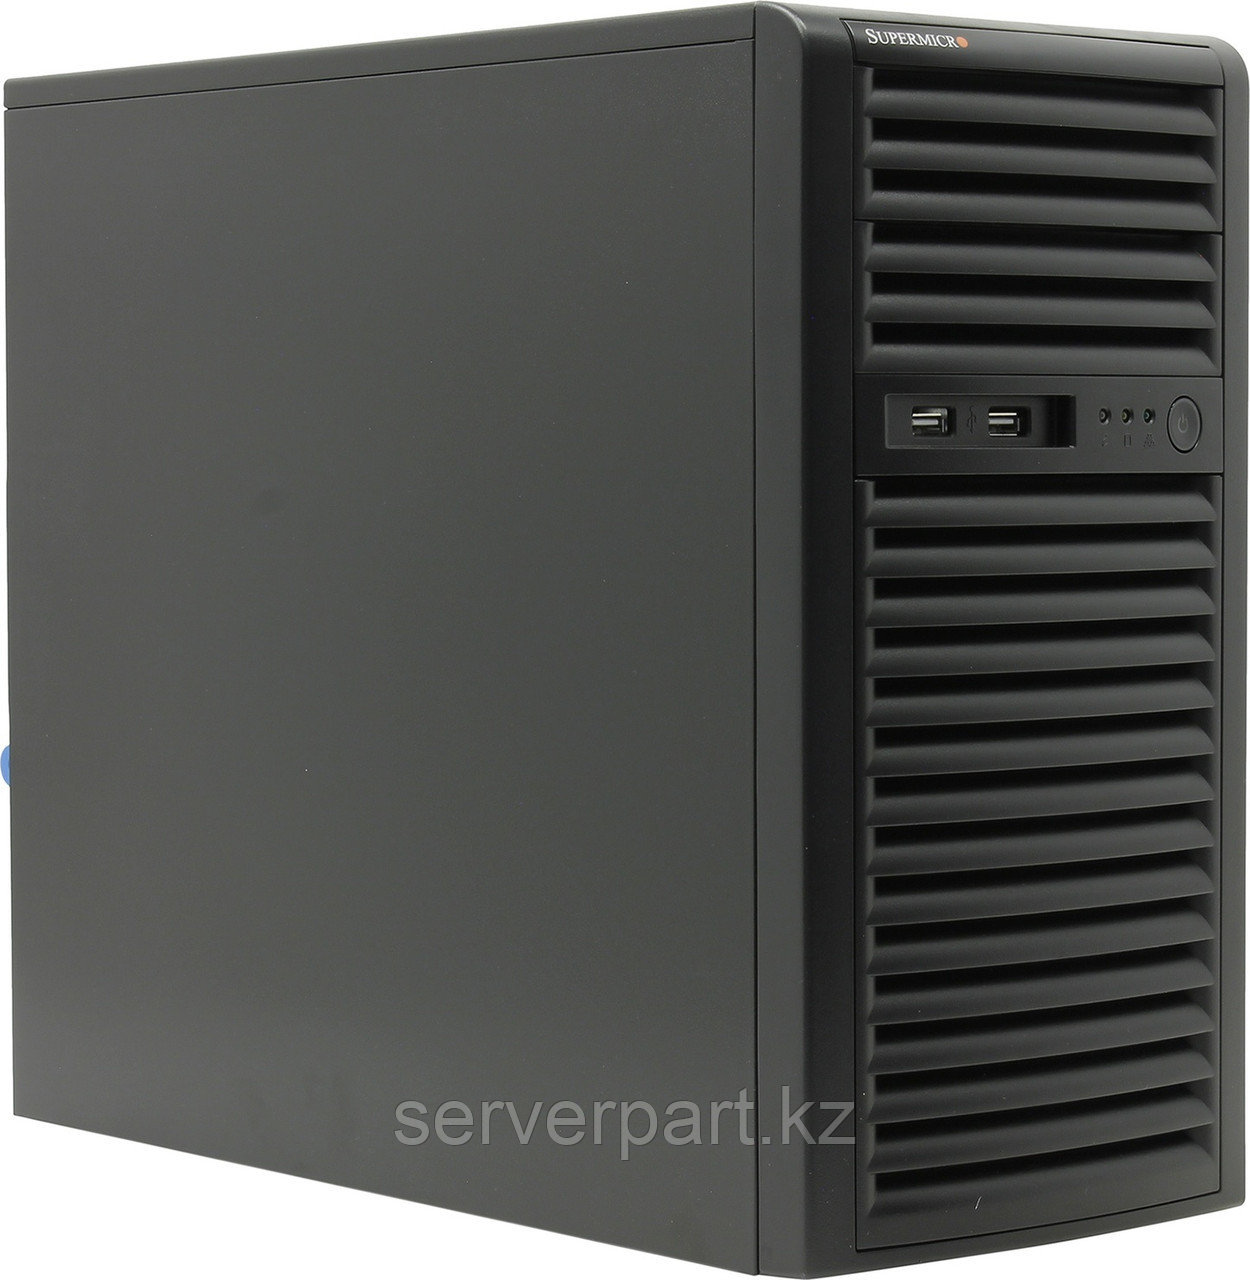 Сервер Supermicro SYS-5039C Tower 4LFF/4-core intel xeon E2124 3.3GHz/16GB EUDIMM/1x240GB SSD RI Hyb